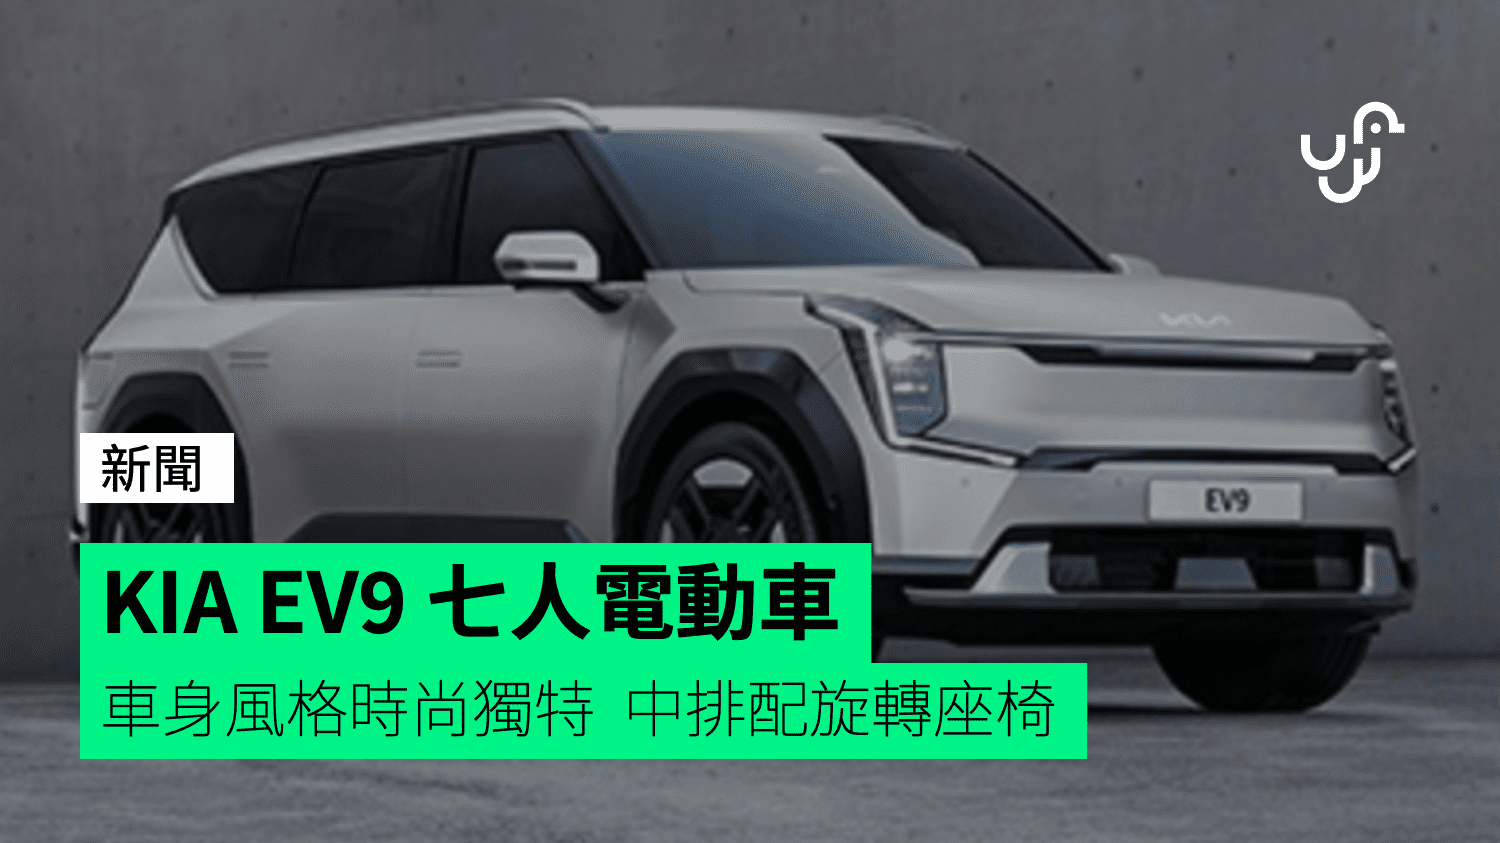 Kia 7 人電動車「Ev9」 車身風格時尚獨特中排配旋轉座椅- 香港Unwire.Hk